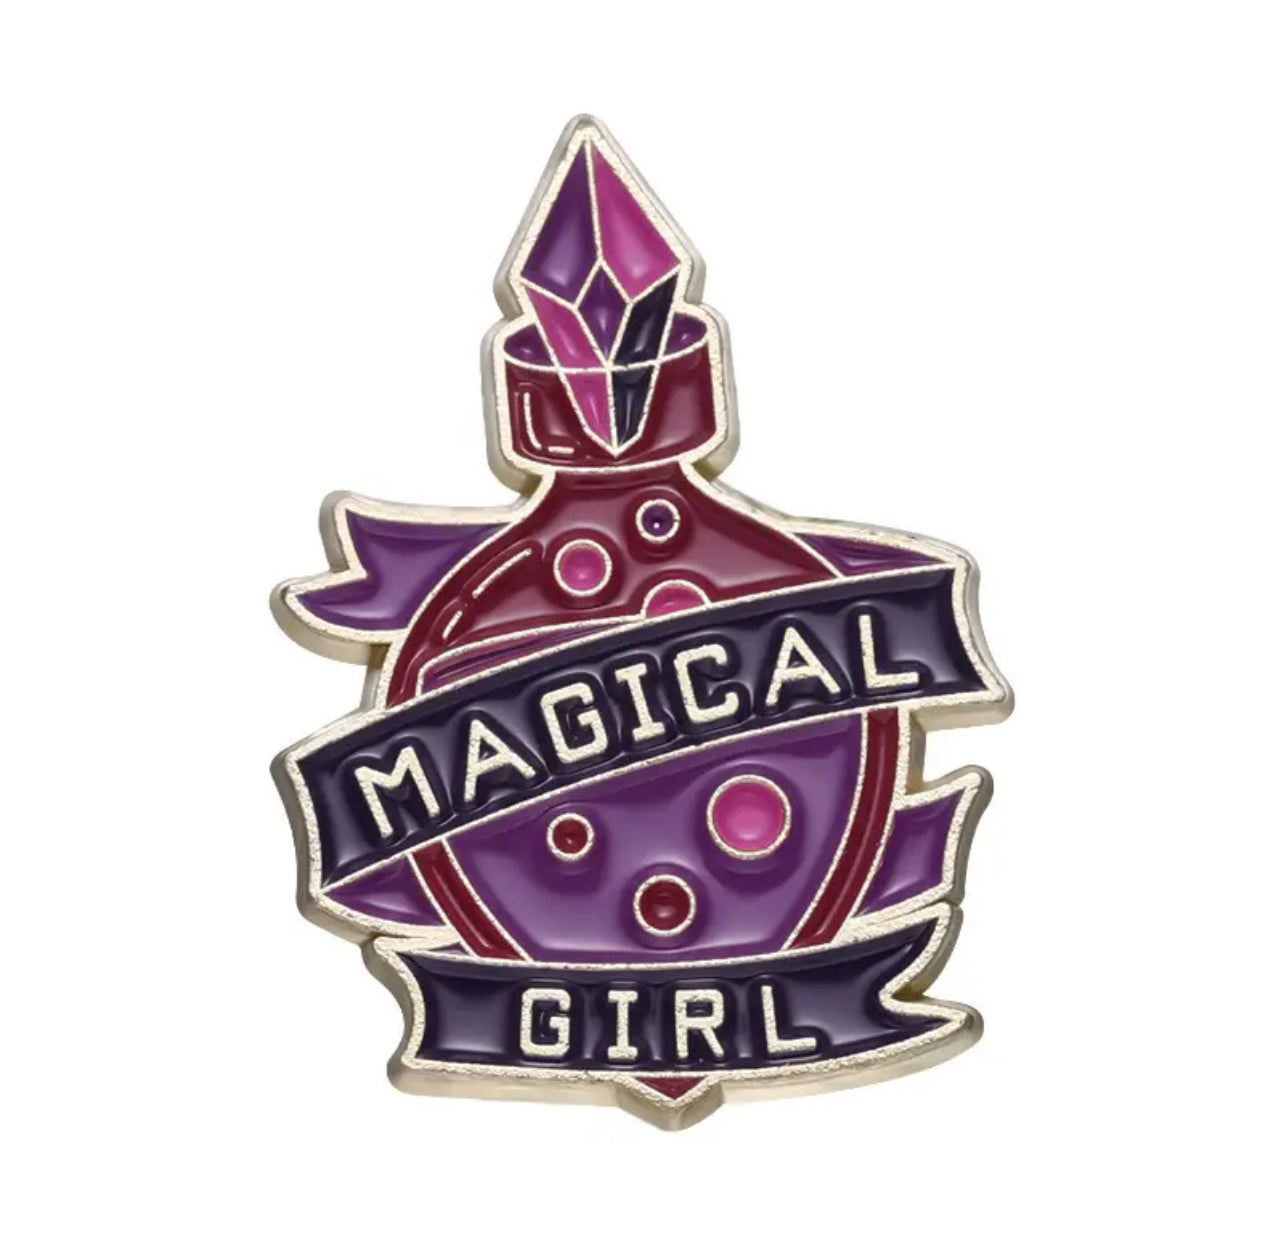 Magical girl